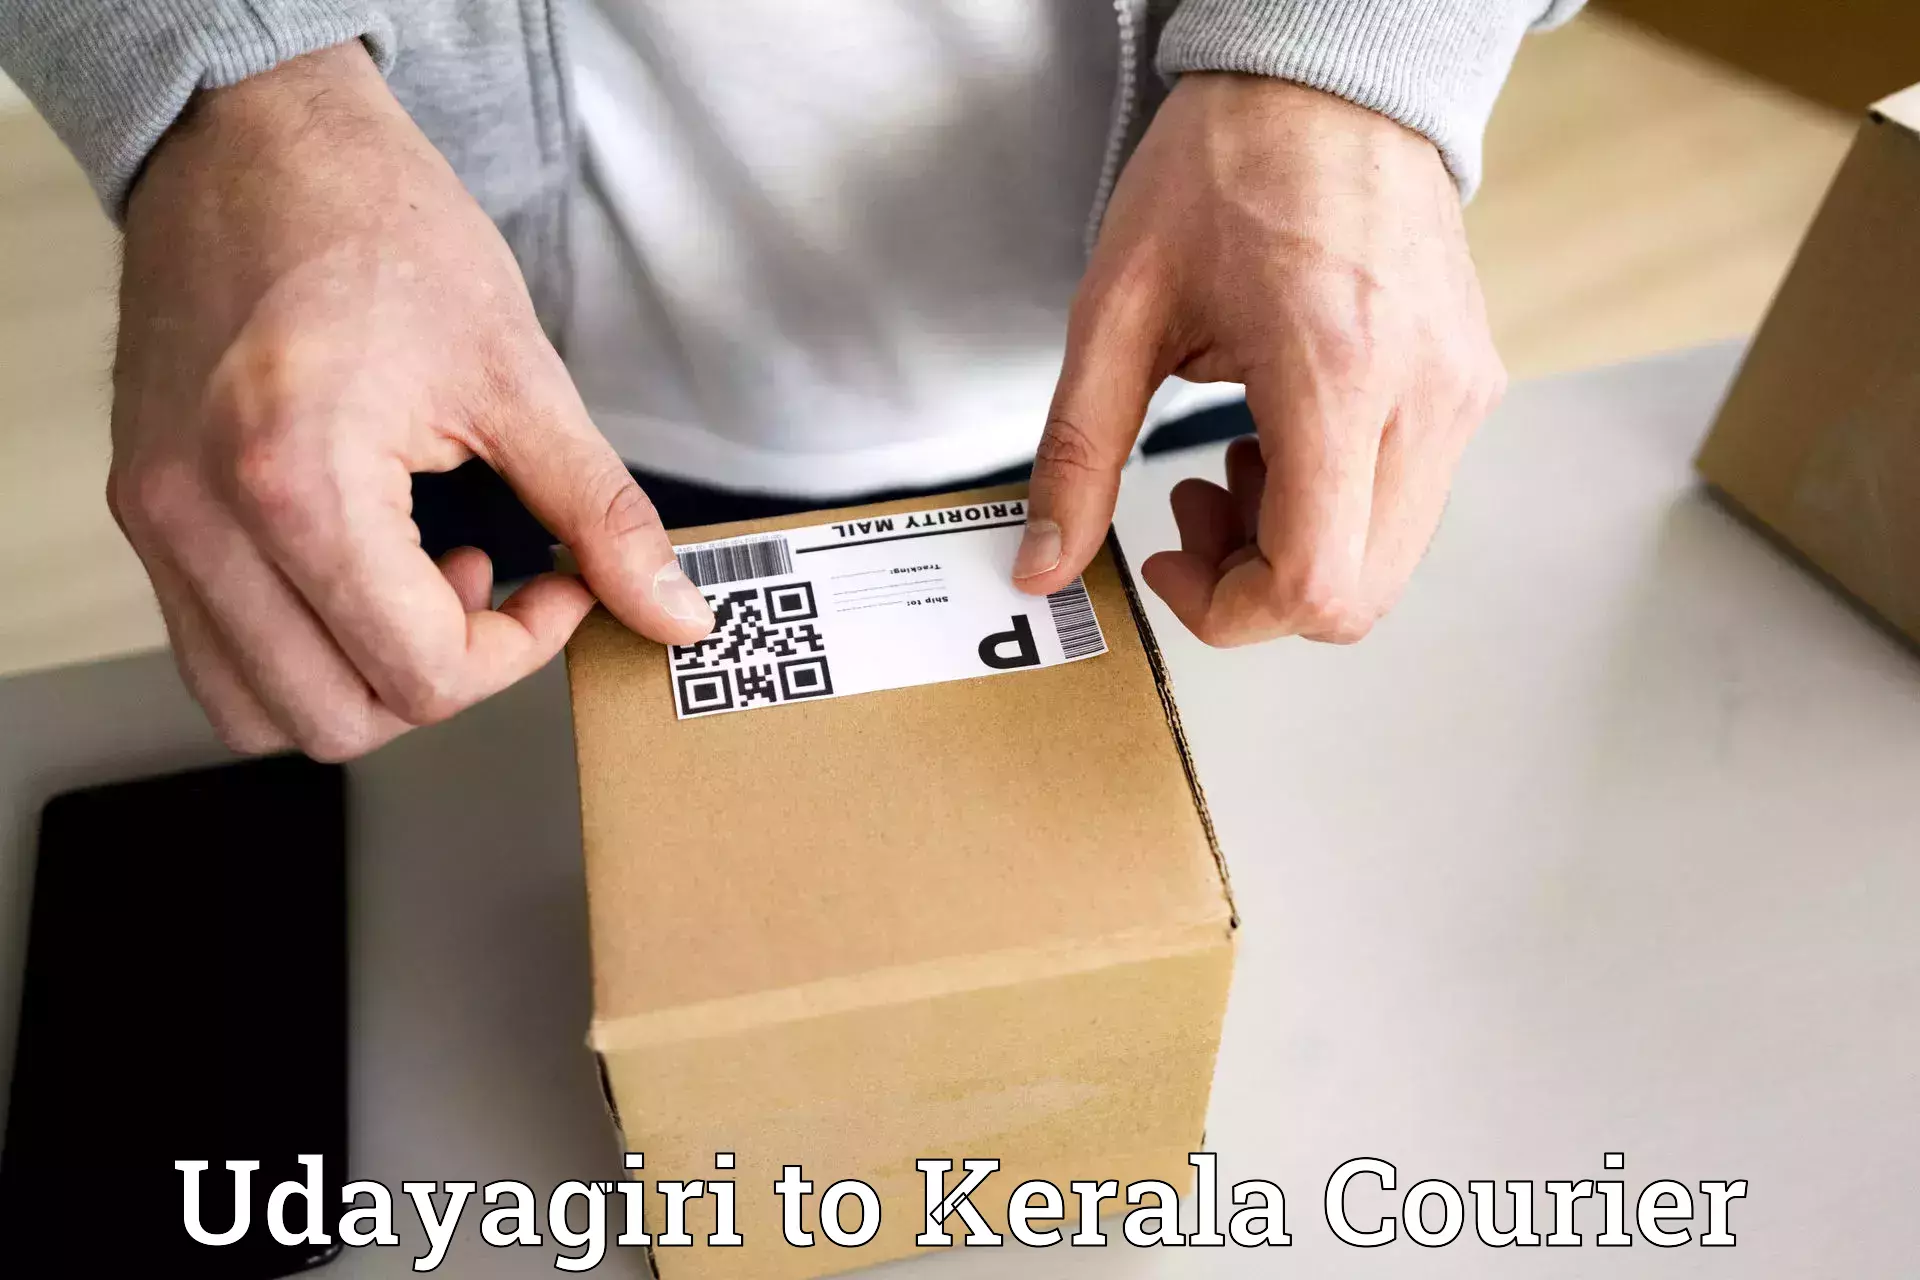 Reliable package handling Udayagiri to Cochin Port Kochi